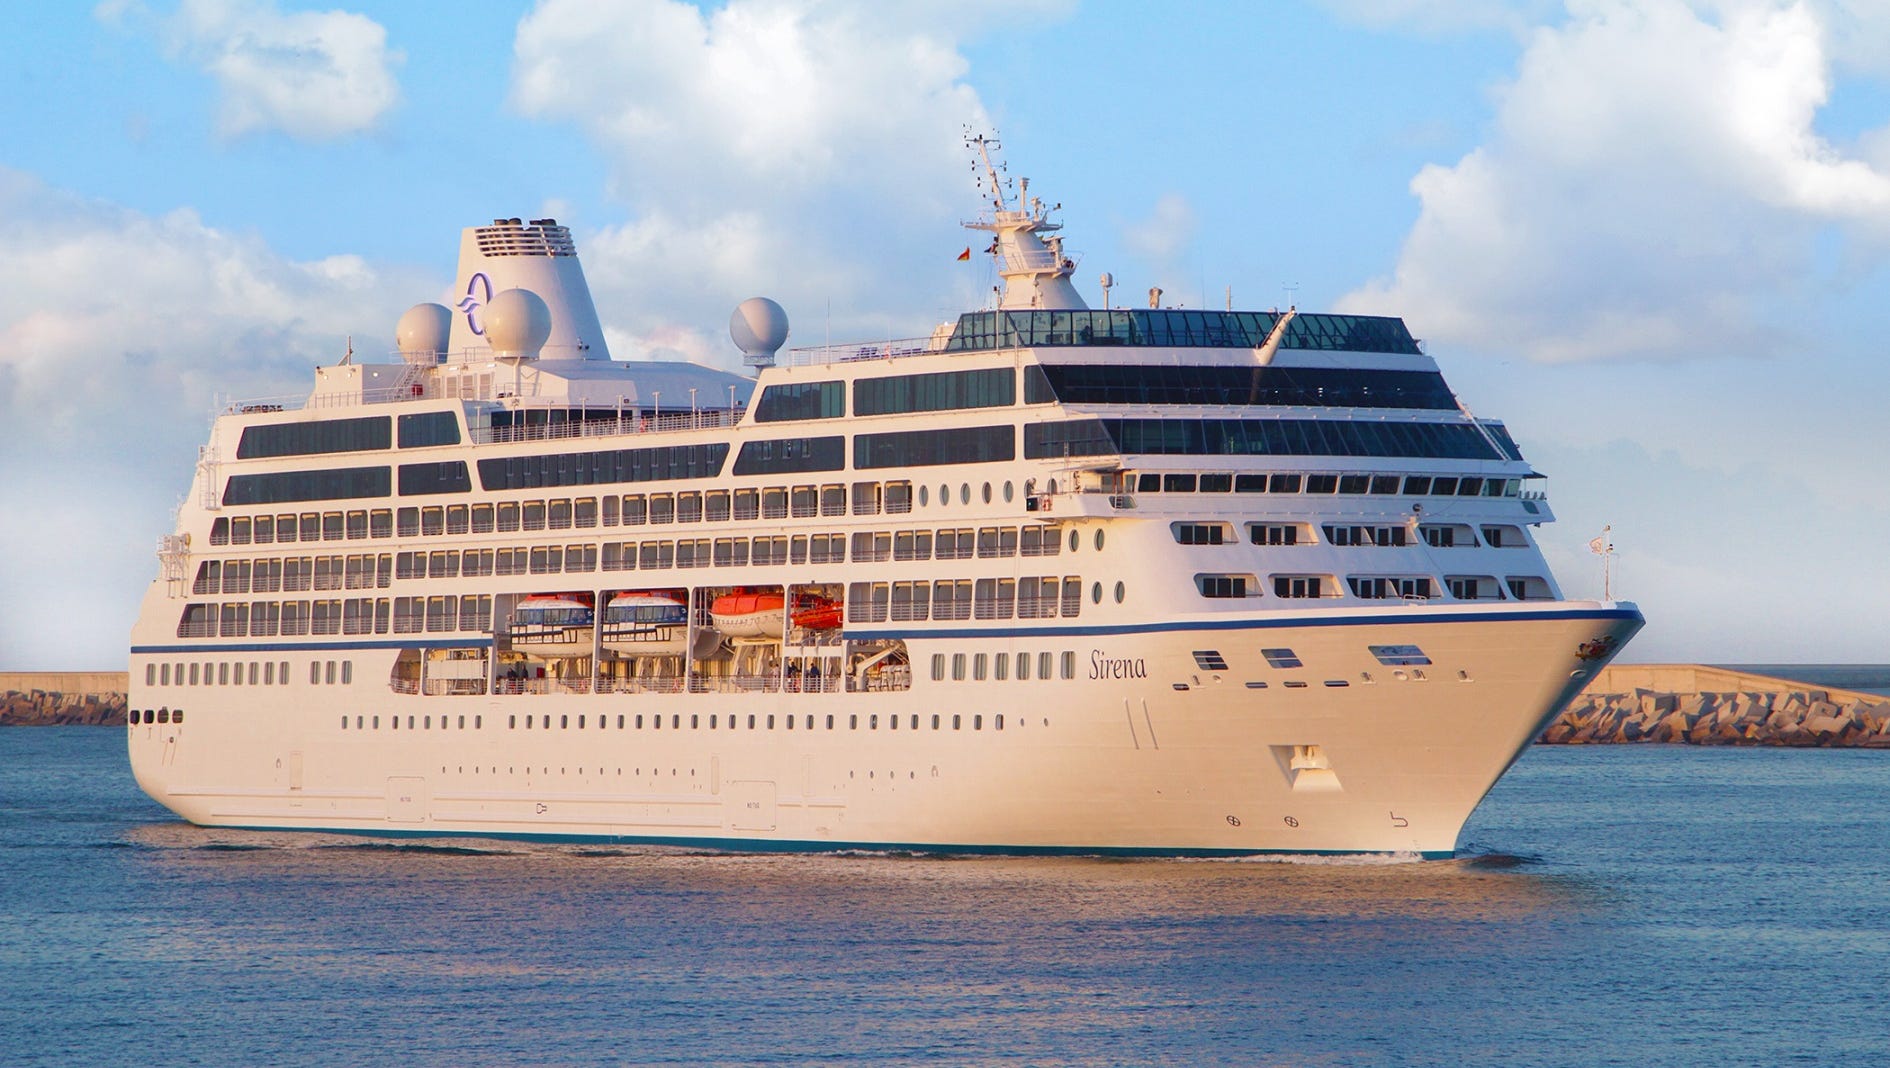 oceania cruise ships capacity